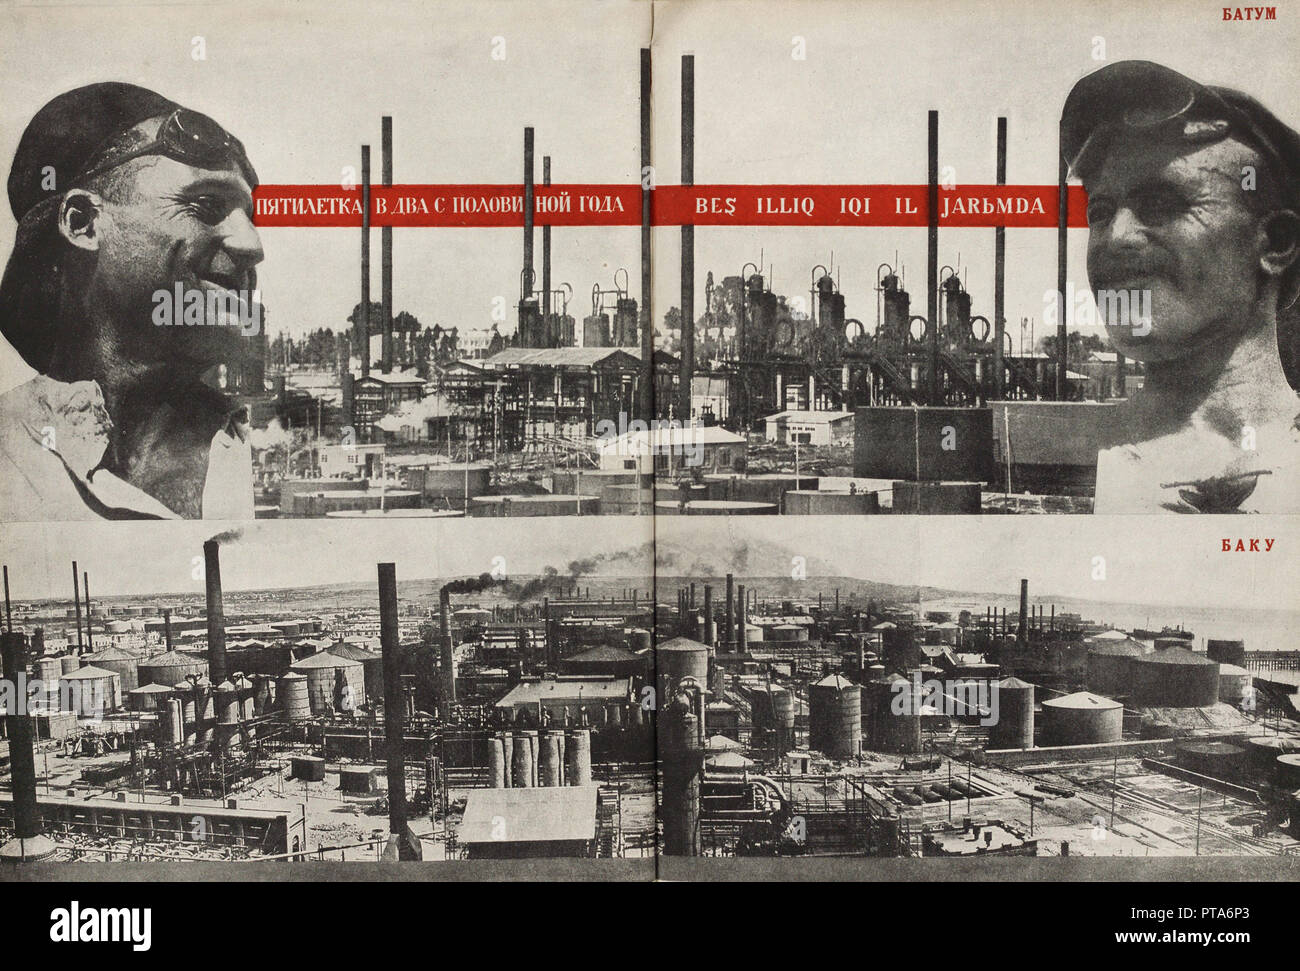 Fünf-jahres-Plan: Batumi - Baku. Abbildung aus der UDSSR baut Sozialismus, 1933. Schöpfer: Lissitzky, El (1890-1941). Stockfoto